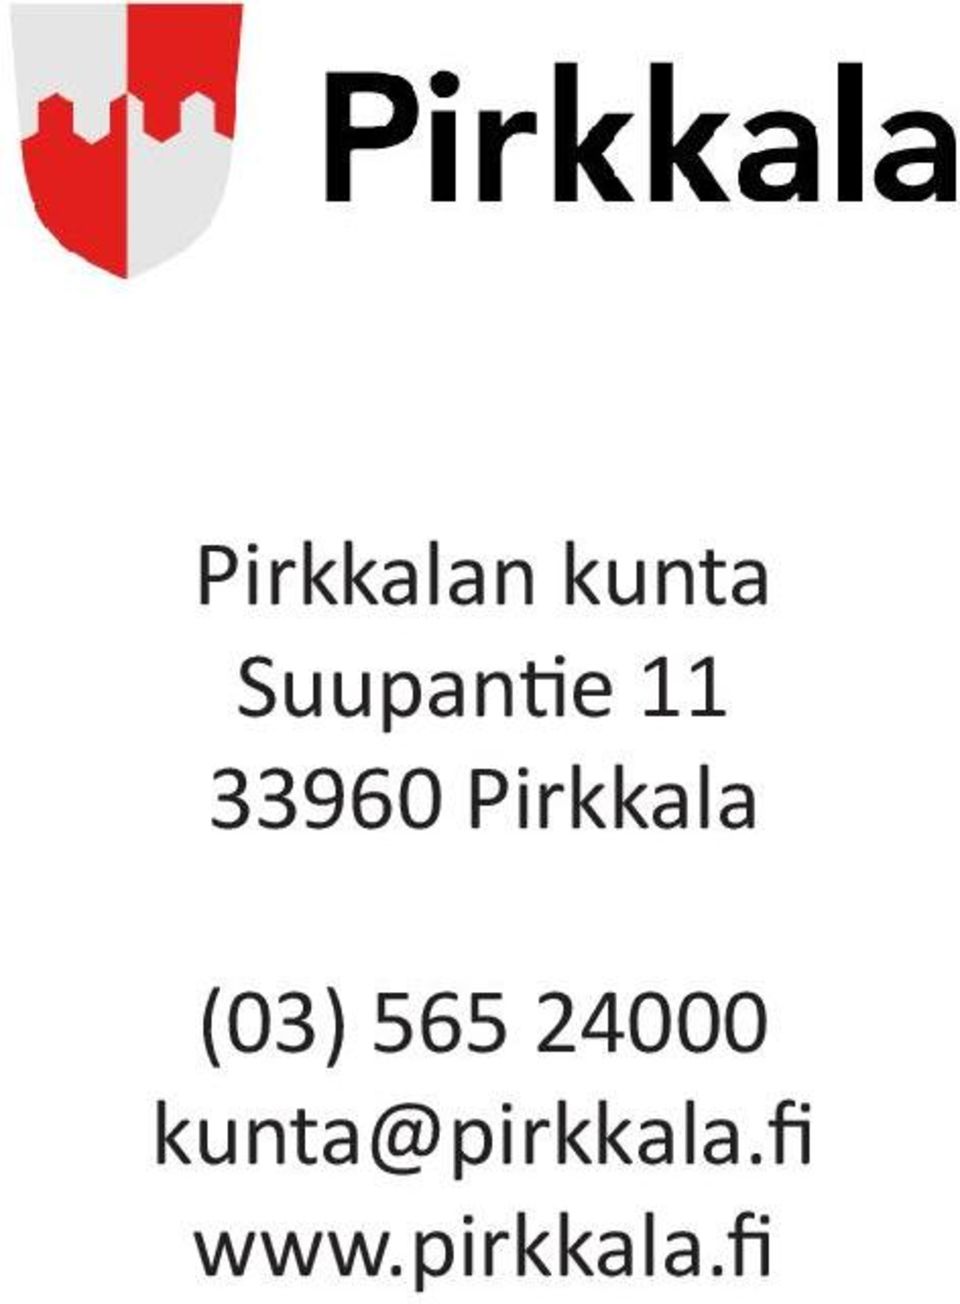 Pirkkala (03) 565 24000